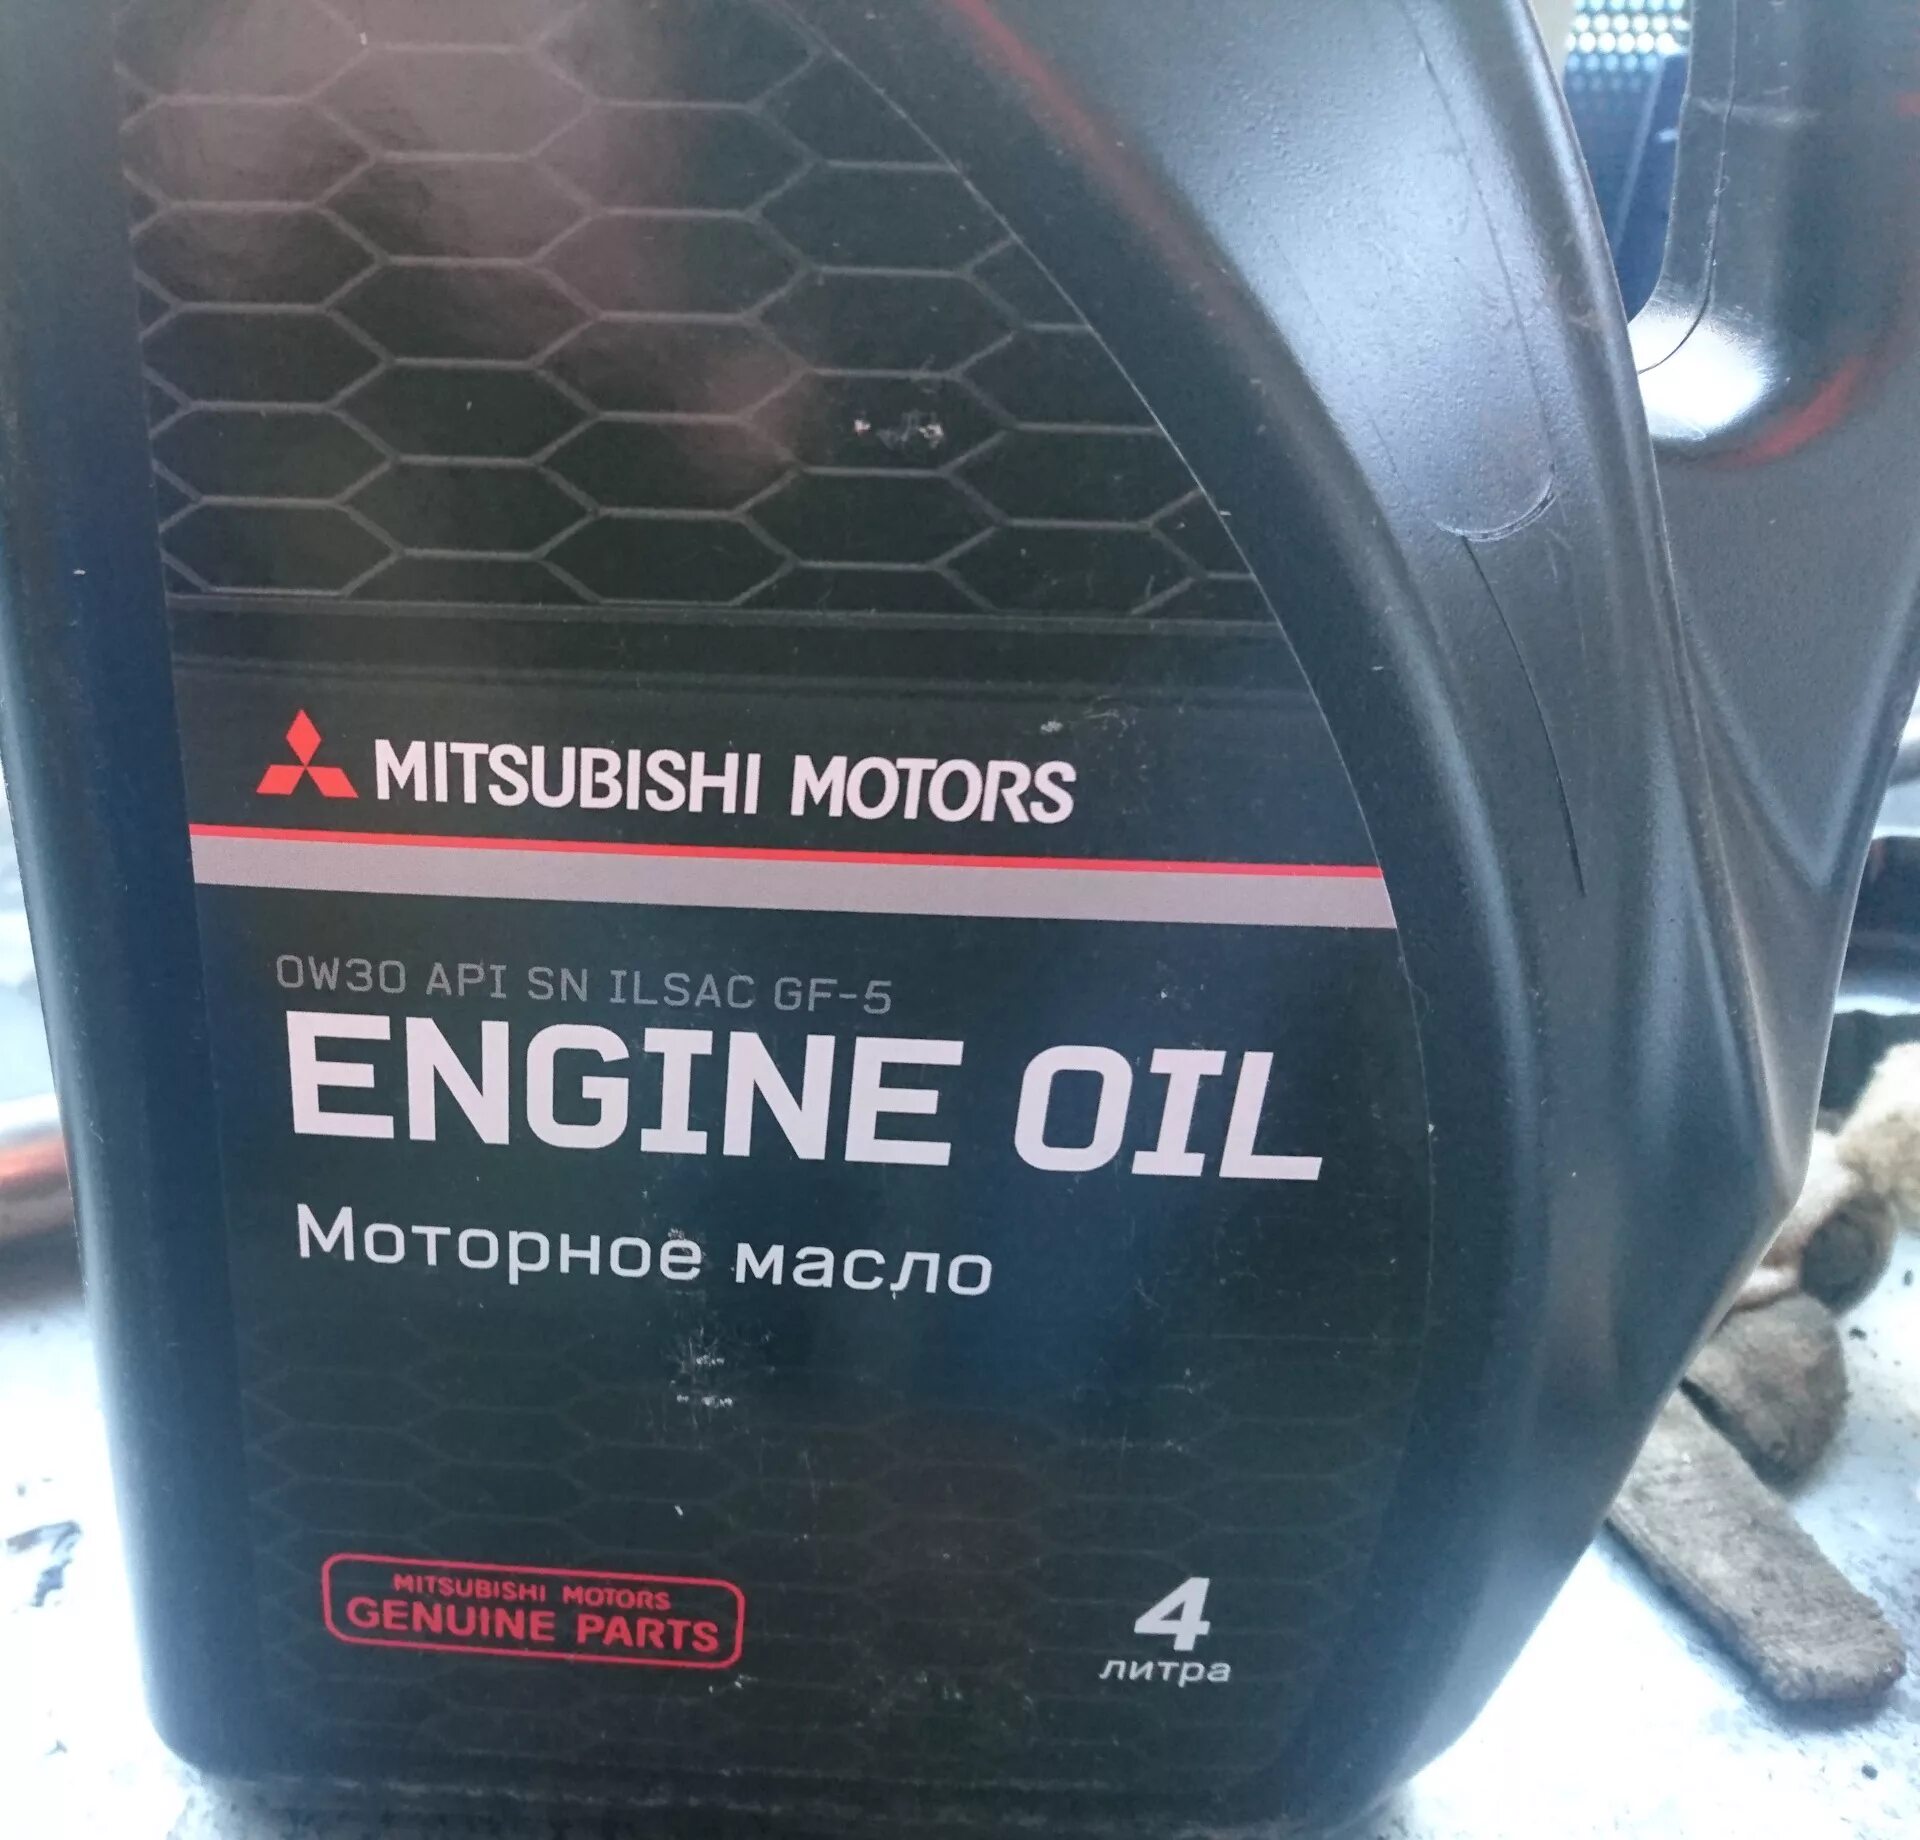 Моторное масло Митсубиси Паджеро. Engine Oil ow 30 Mitsubishi. Engine Oil моторное масло Митсубиси 4 литра. Моторное масло Митсубиси Аутлендер 2 литра.